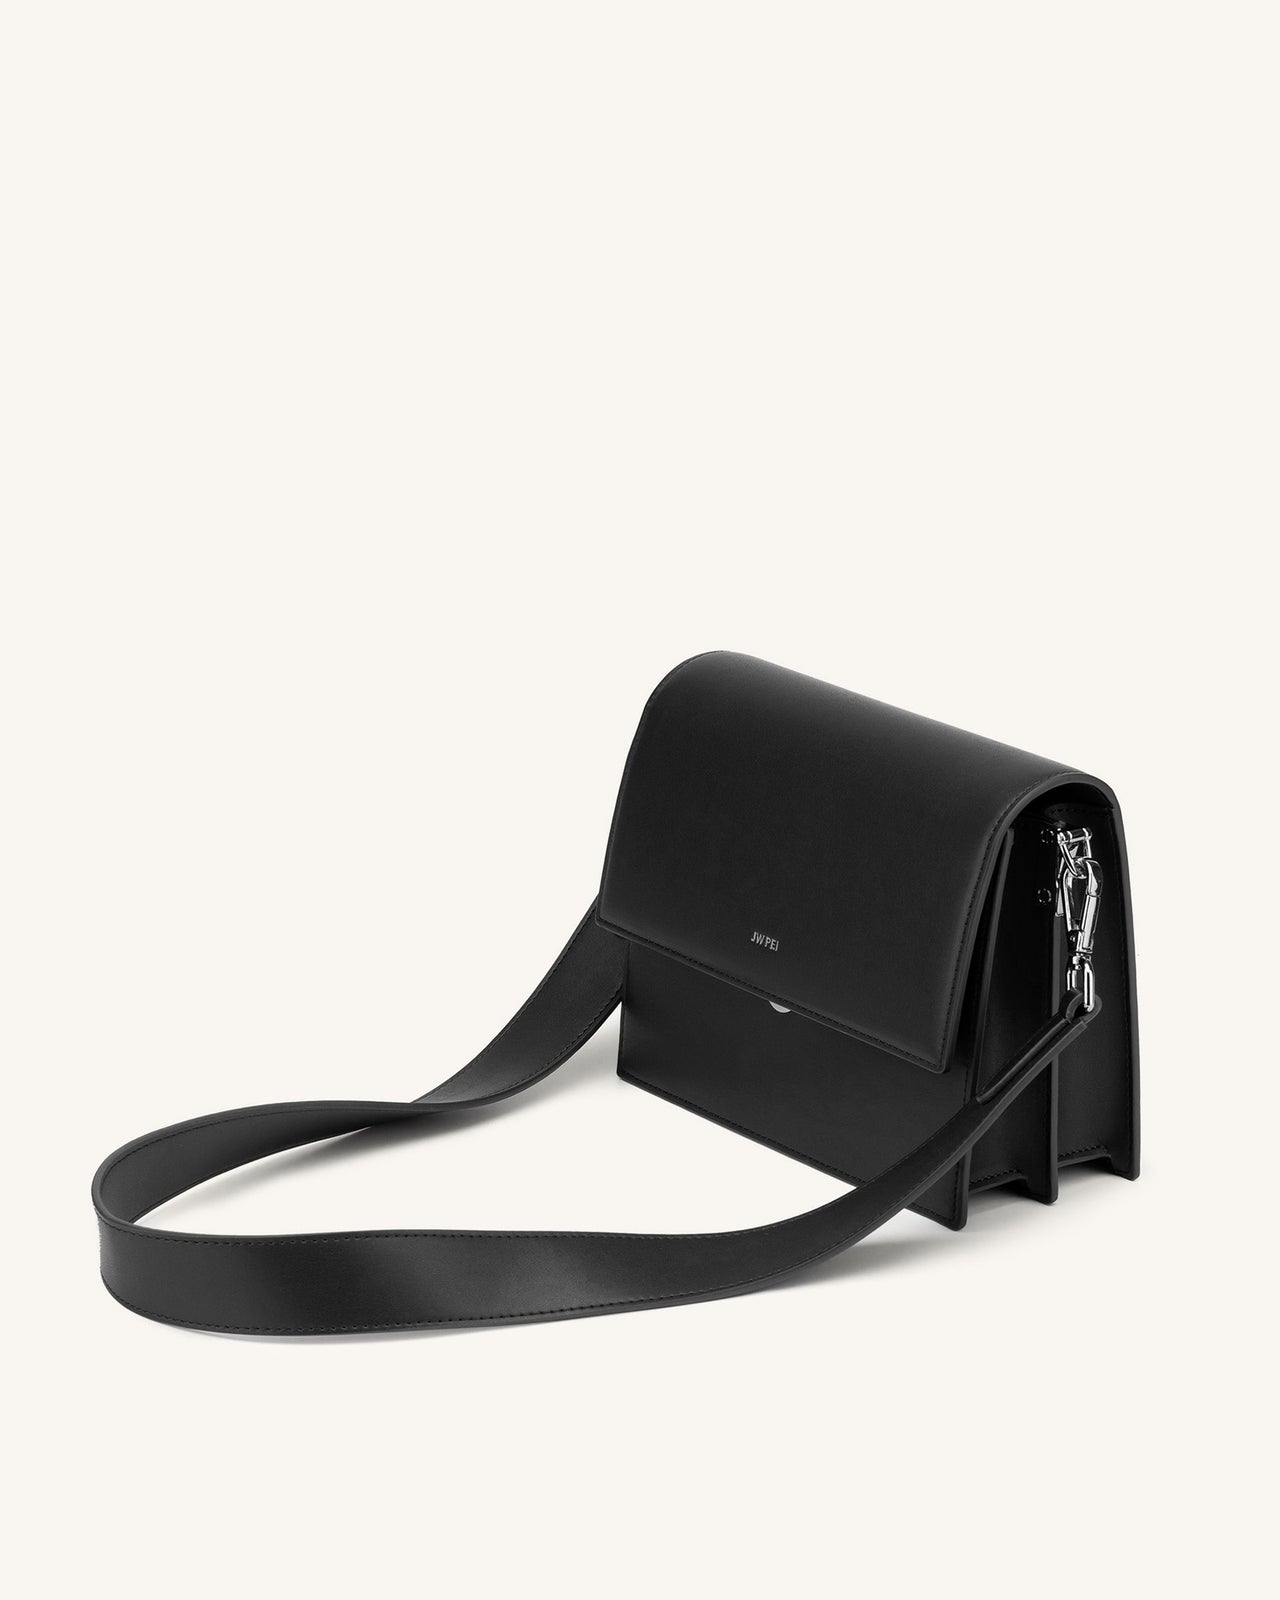 JW PEI Rantan Super Mini Bag Clutch Purse NIB Beige Croc Leather Zip Around